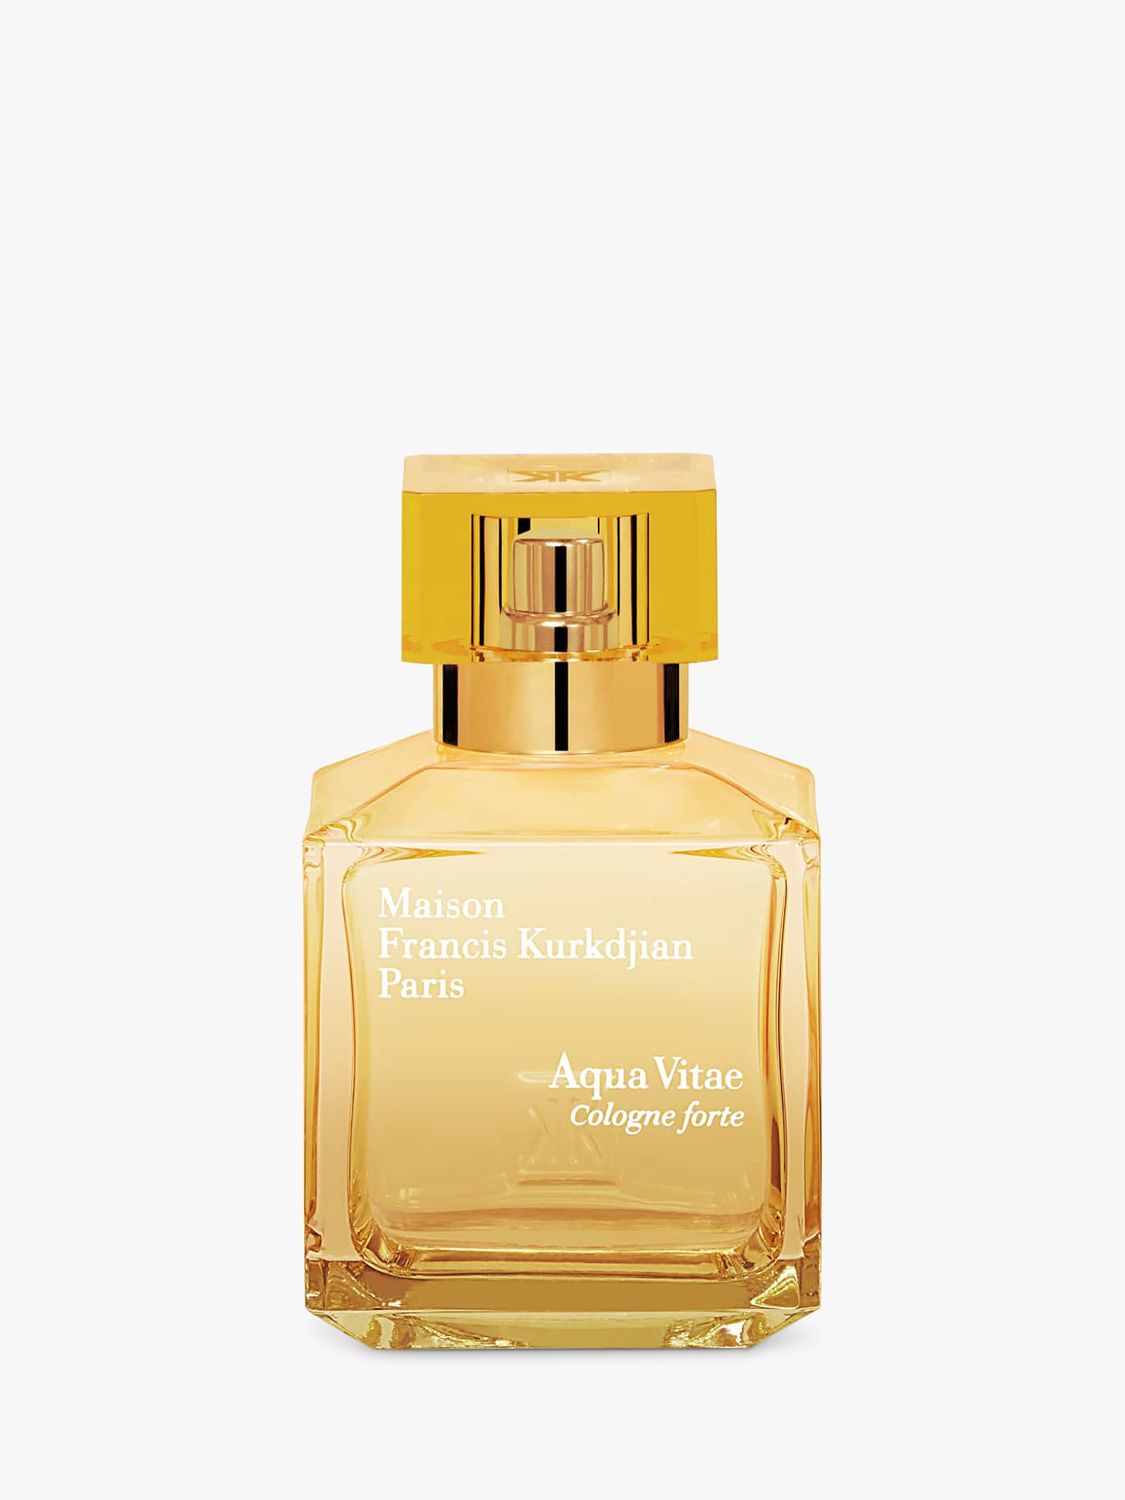 Maison Francis Kurkdjian Aqua Vitae Cologne Forte Eau de Parfum, 70ml 3